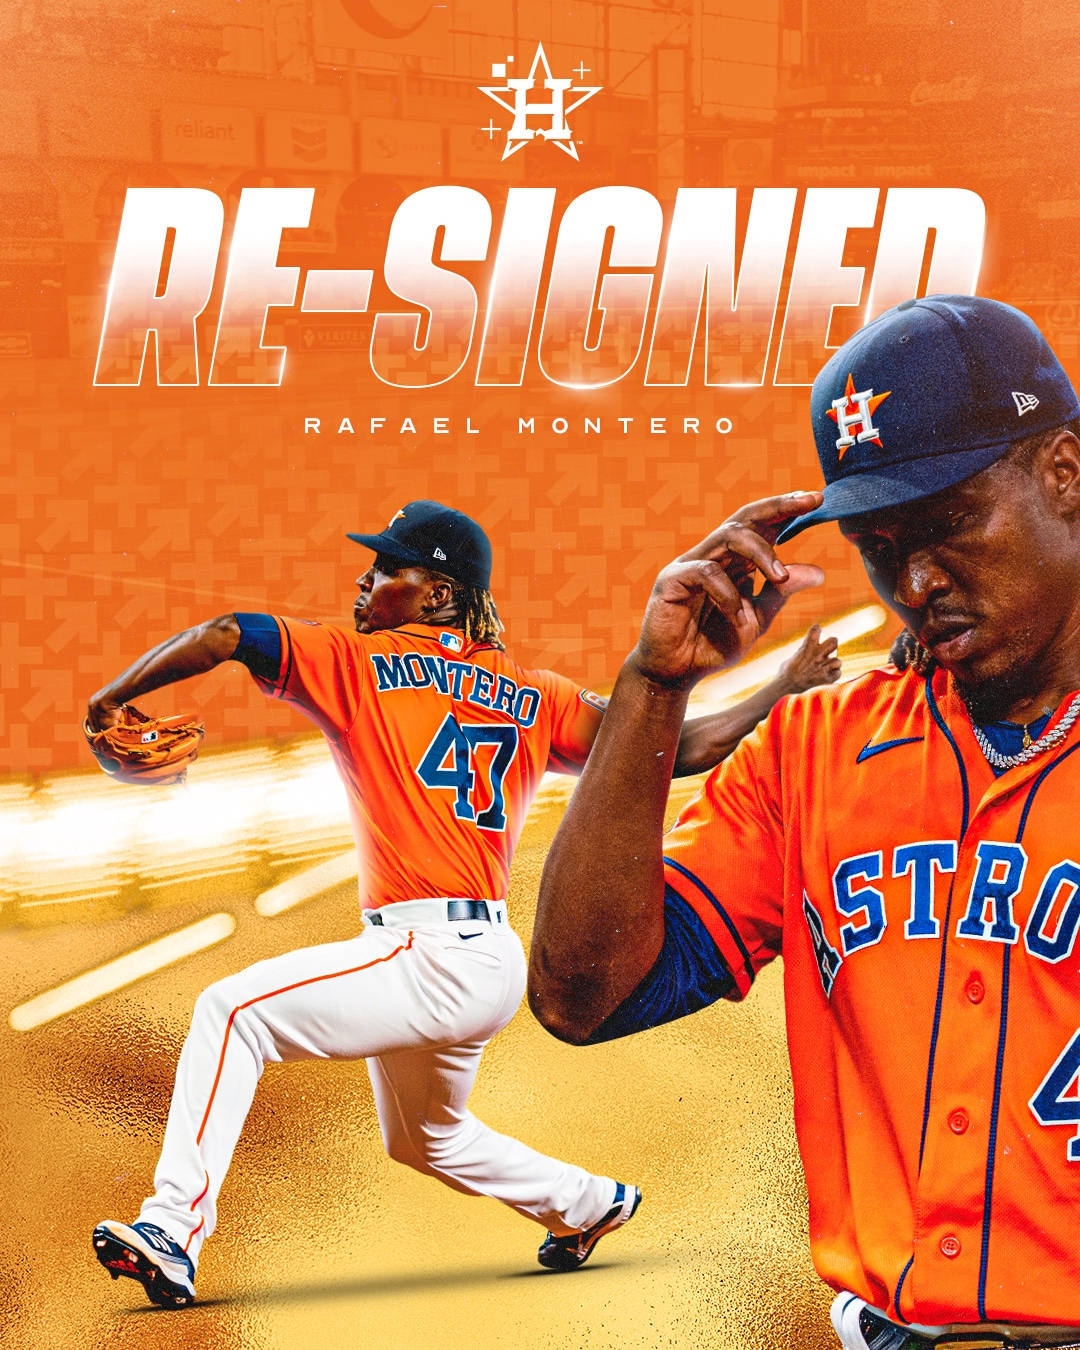 Rafael Montero Re-Signed With Astros Wallpaper